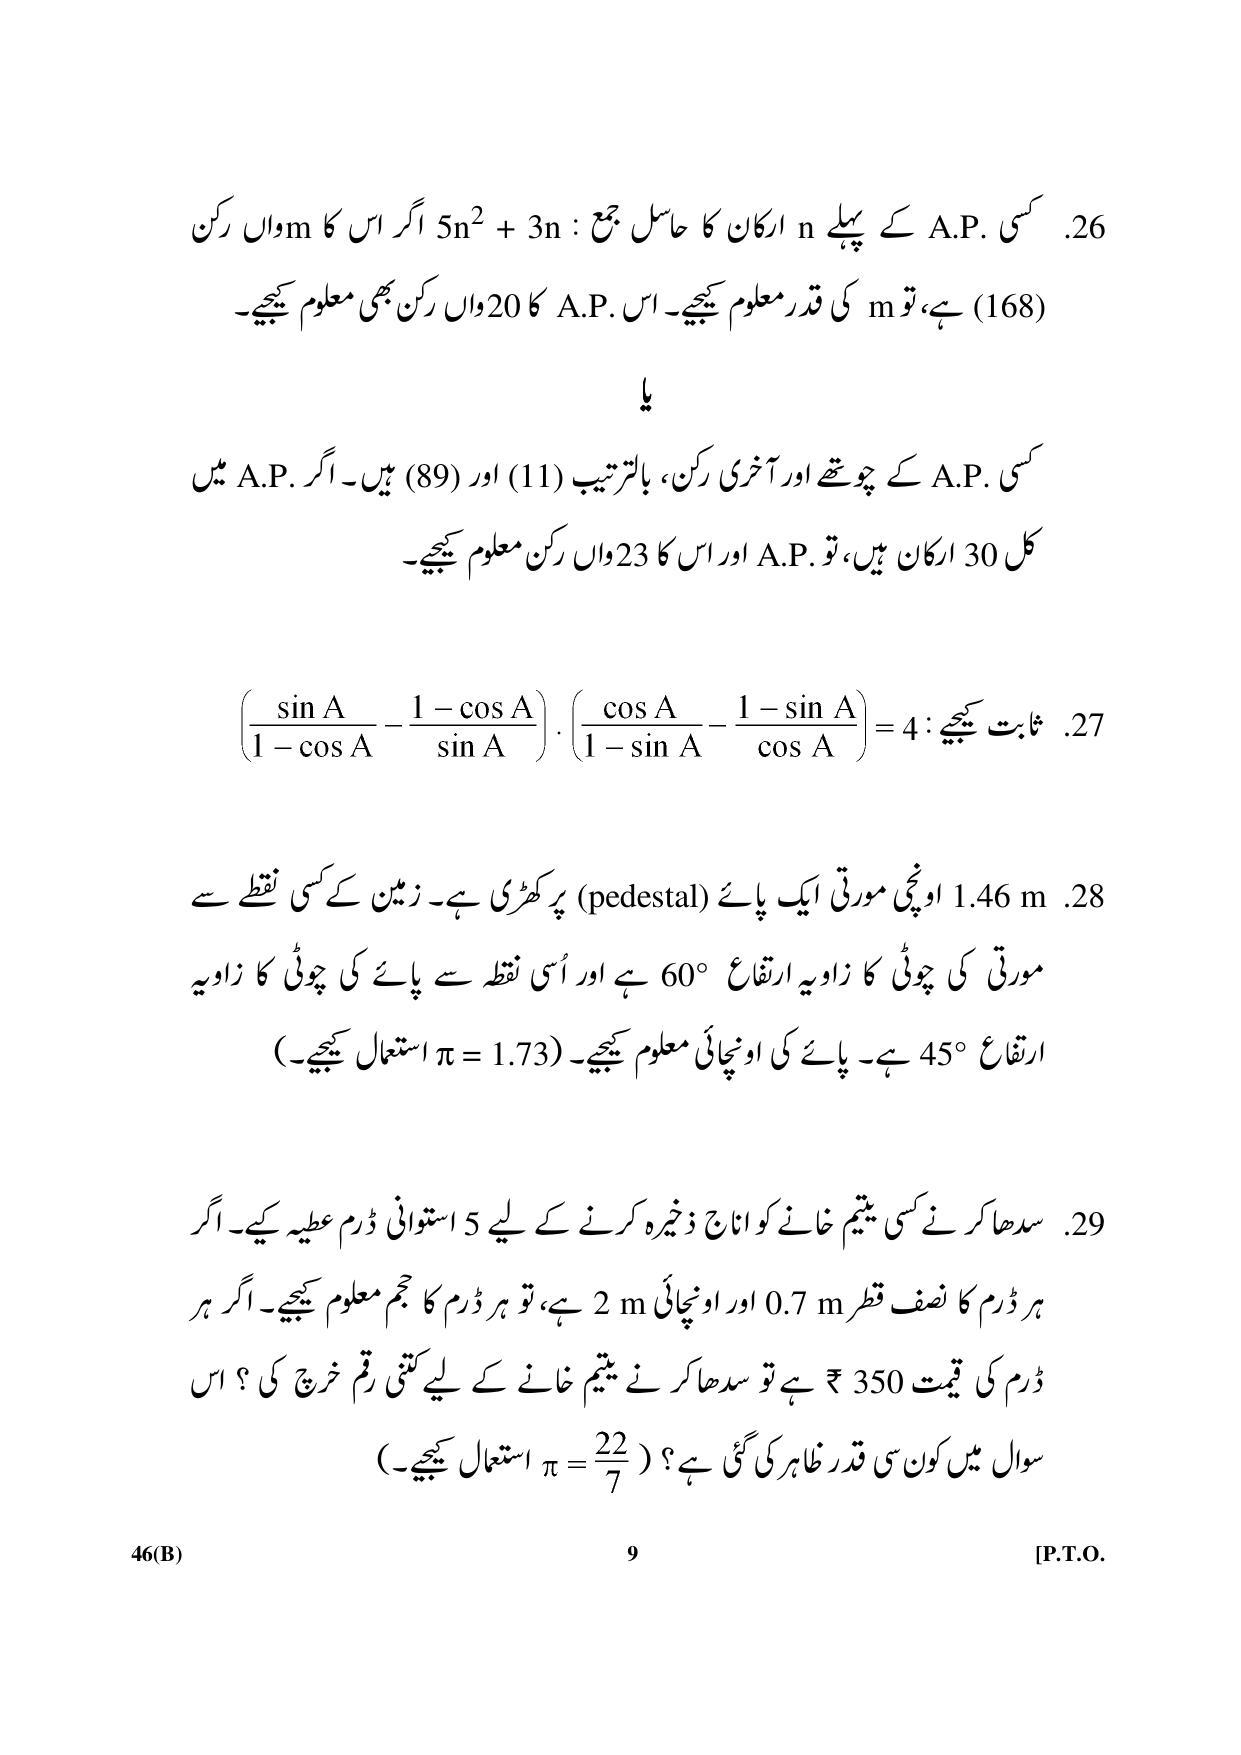 CBSE Class 10 46(B) Maths (For Blind) Urdu Version 2018 Question Paper - Page 9